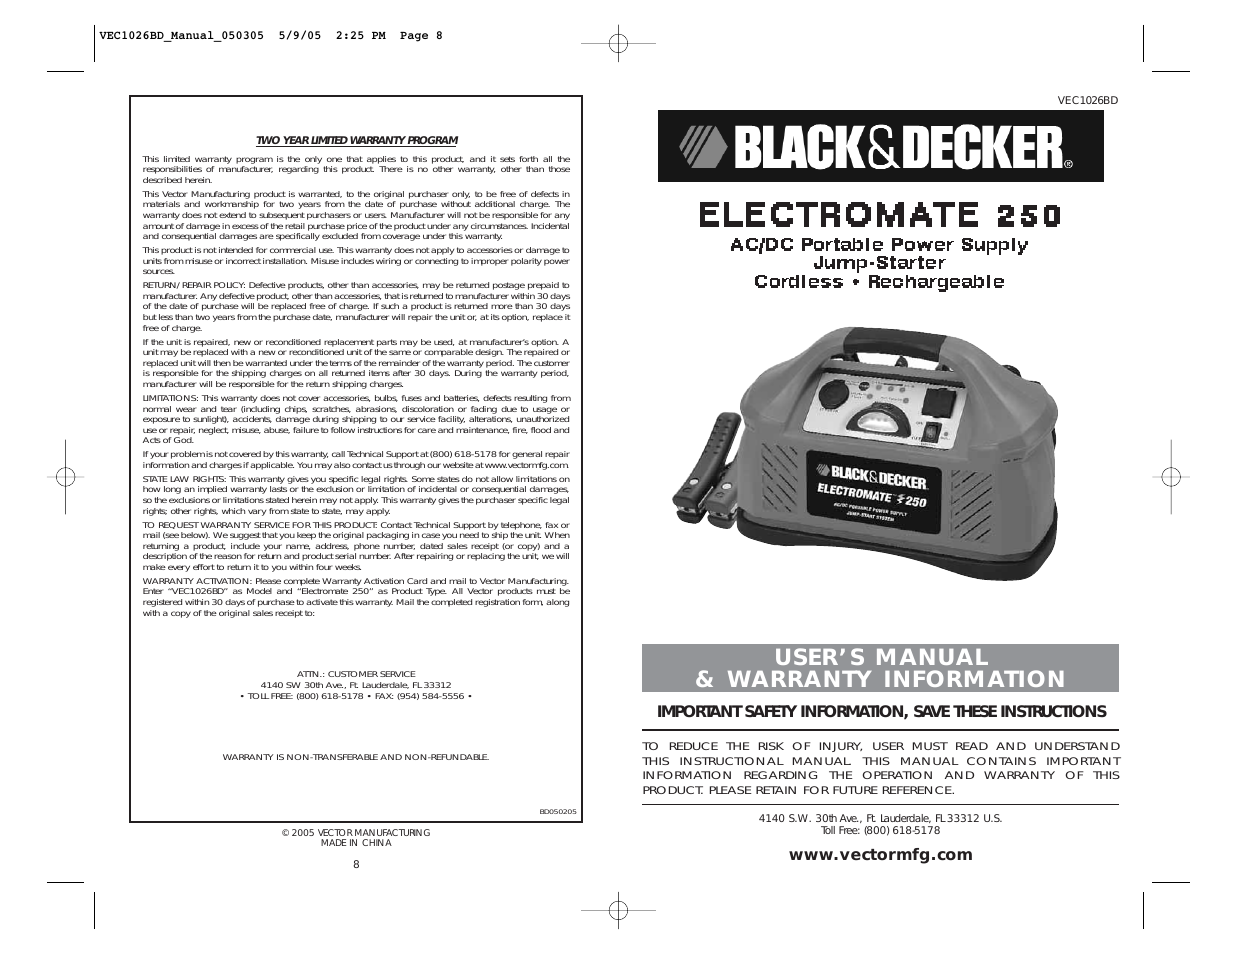 ElectroMate 250